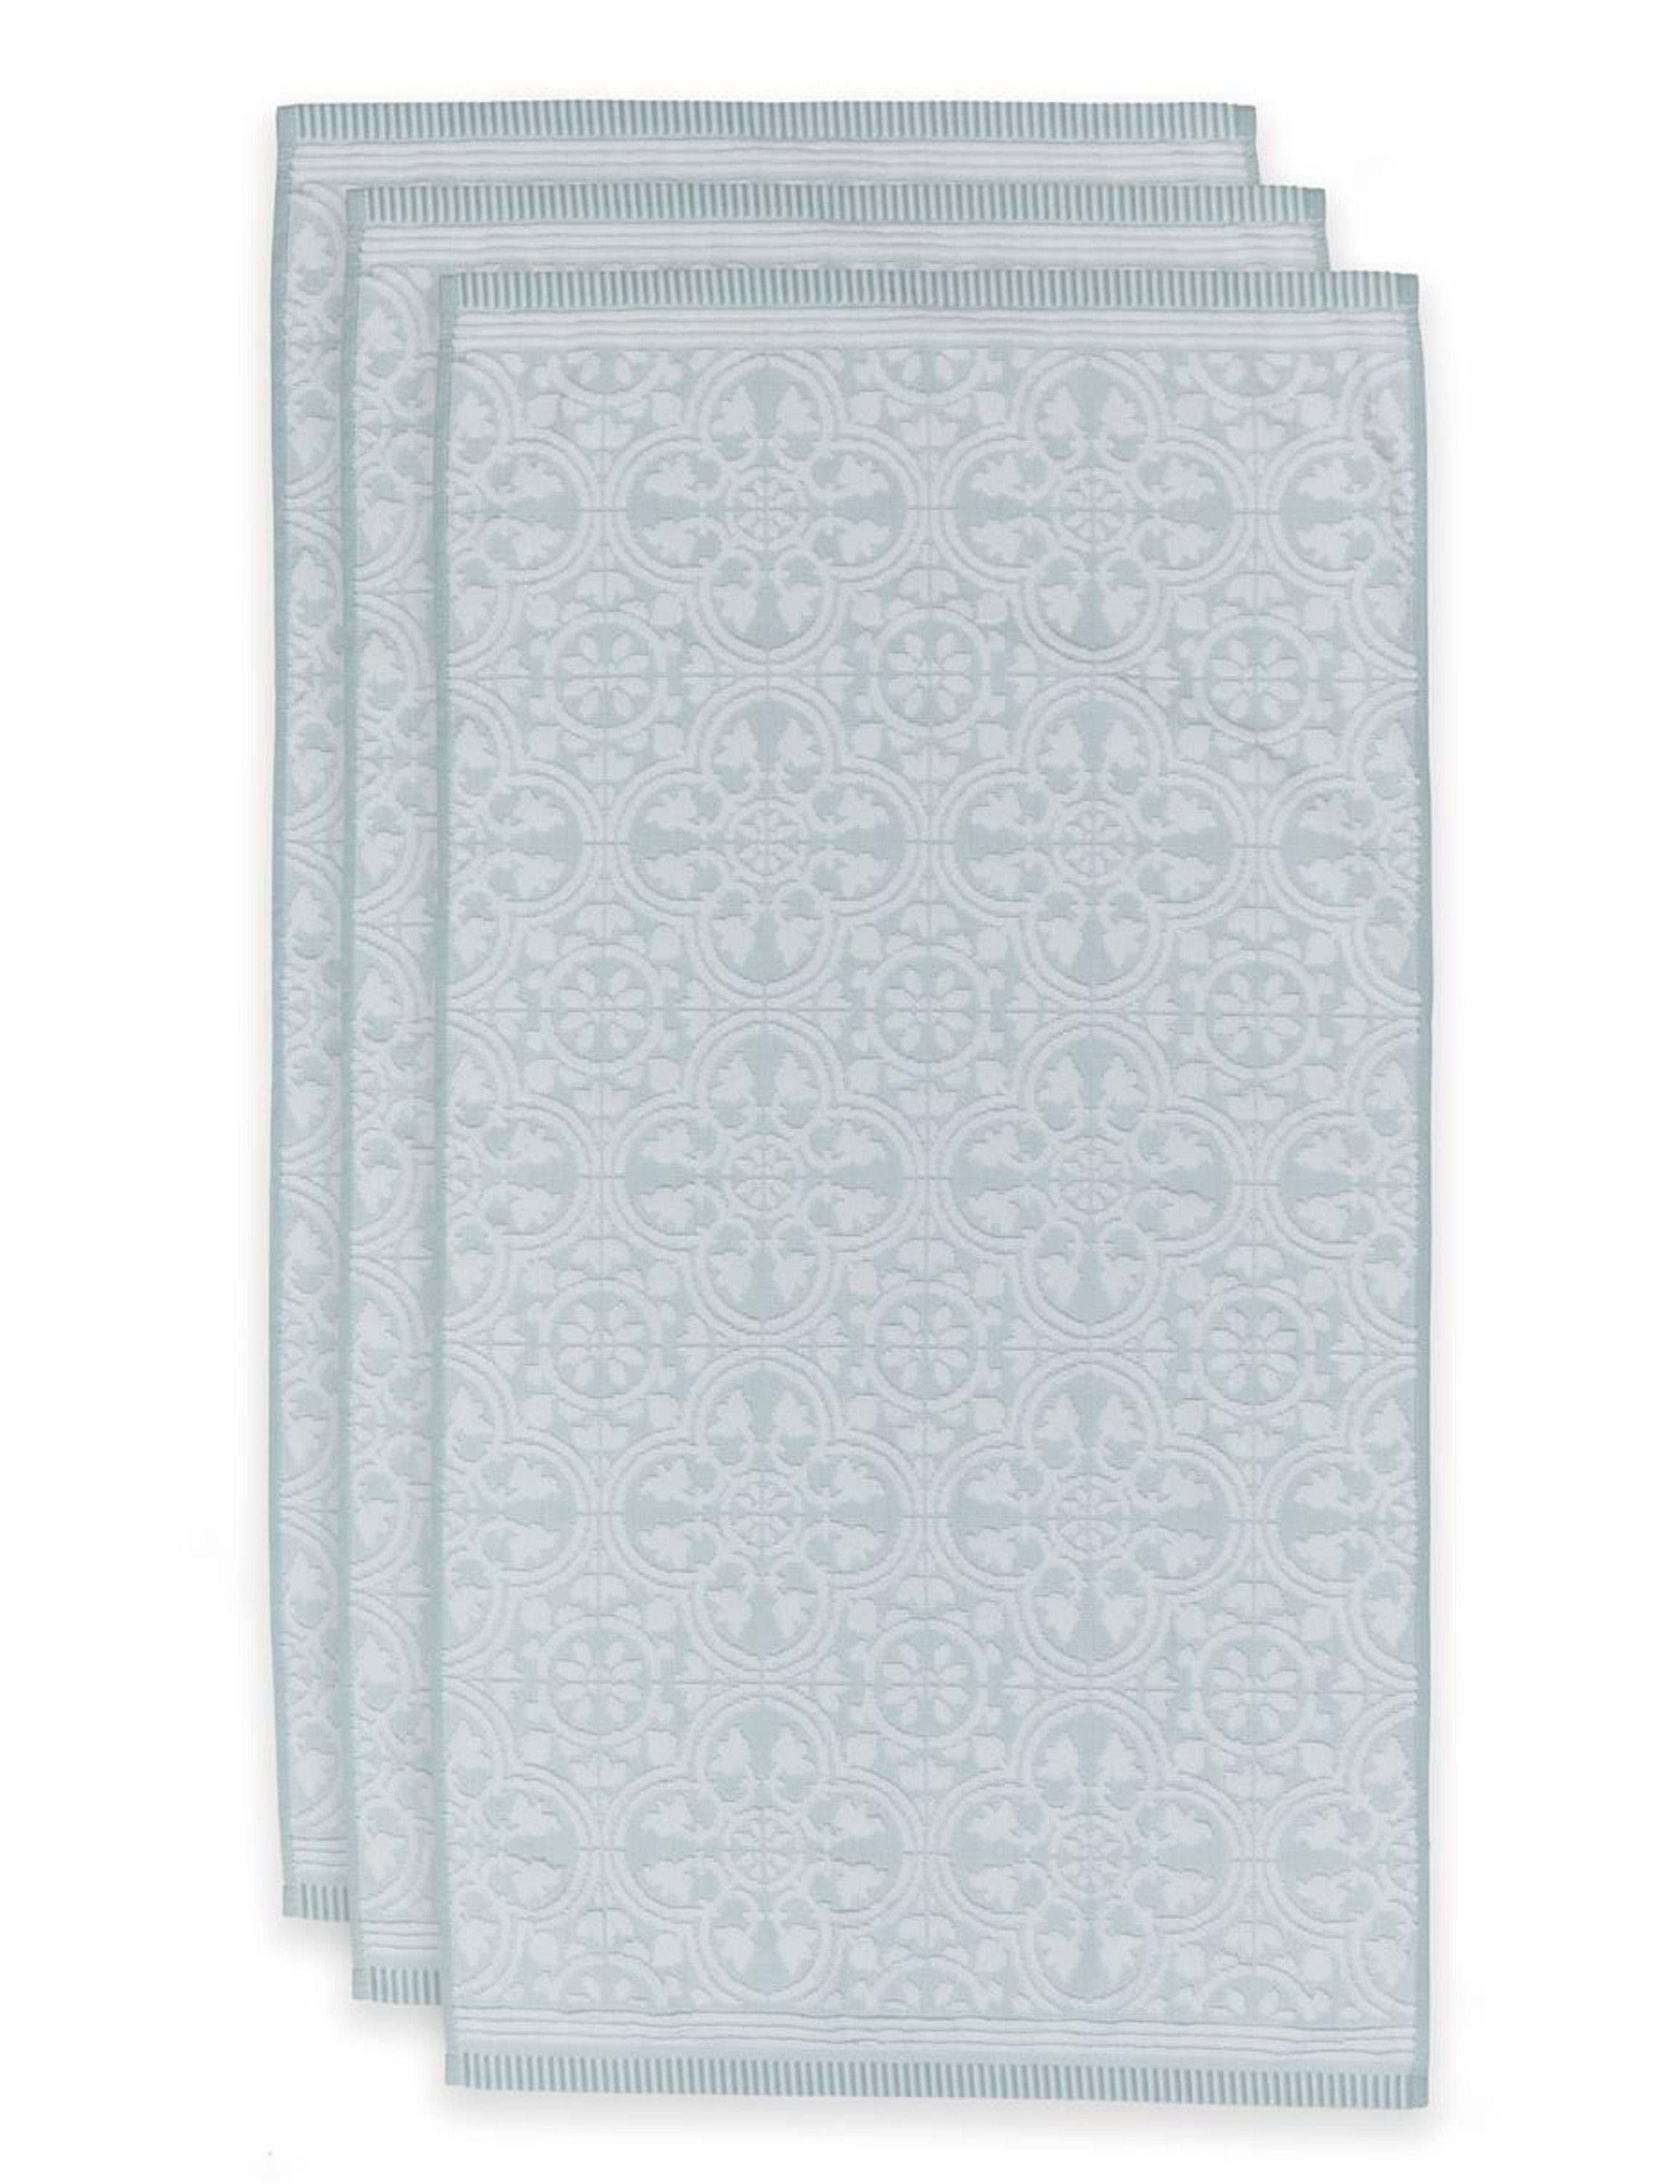 Handtuch Handtuch PiP Waschhandschuh Baumwolle light blue, Studio (1-St), Pip TILE 16x22 rechteckig, Gästetuch LE cm Duschtuch, PIP Größe Waschhandschuh: